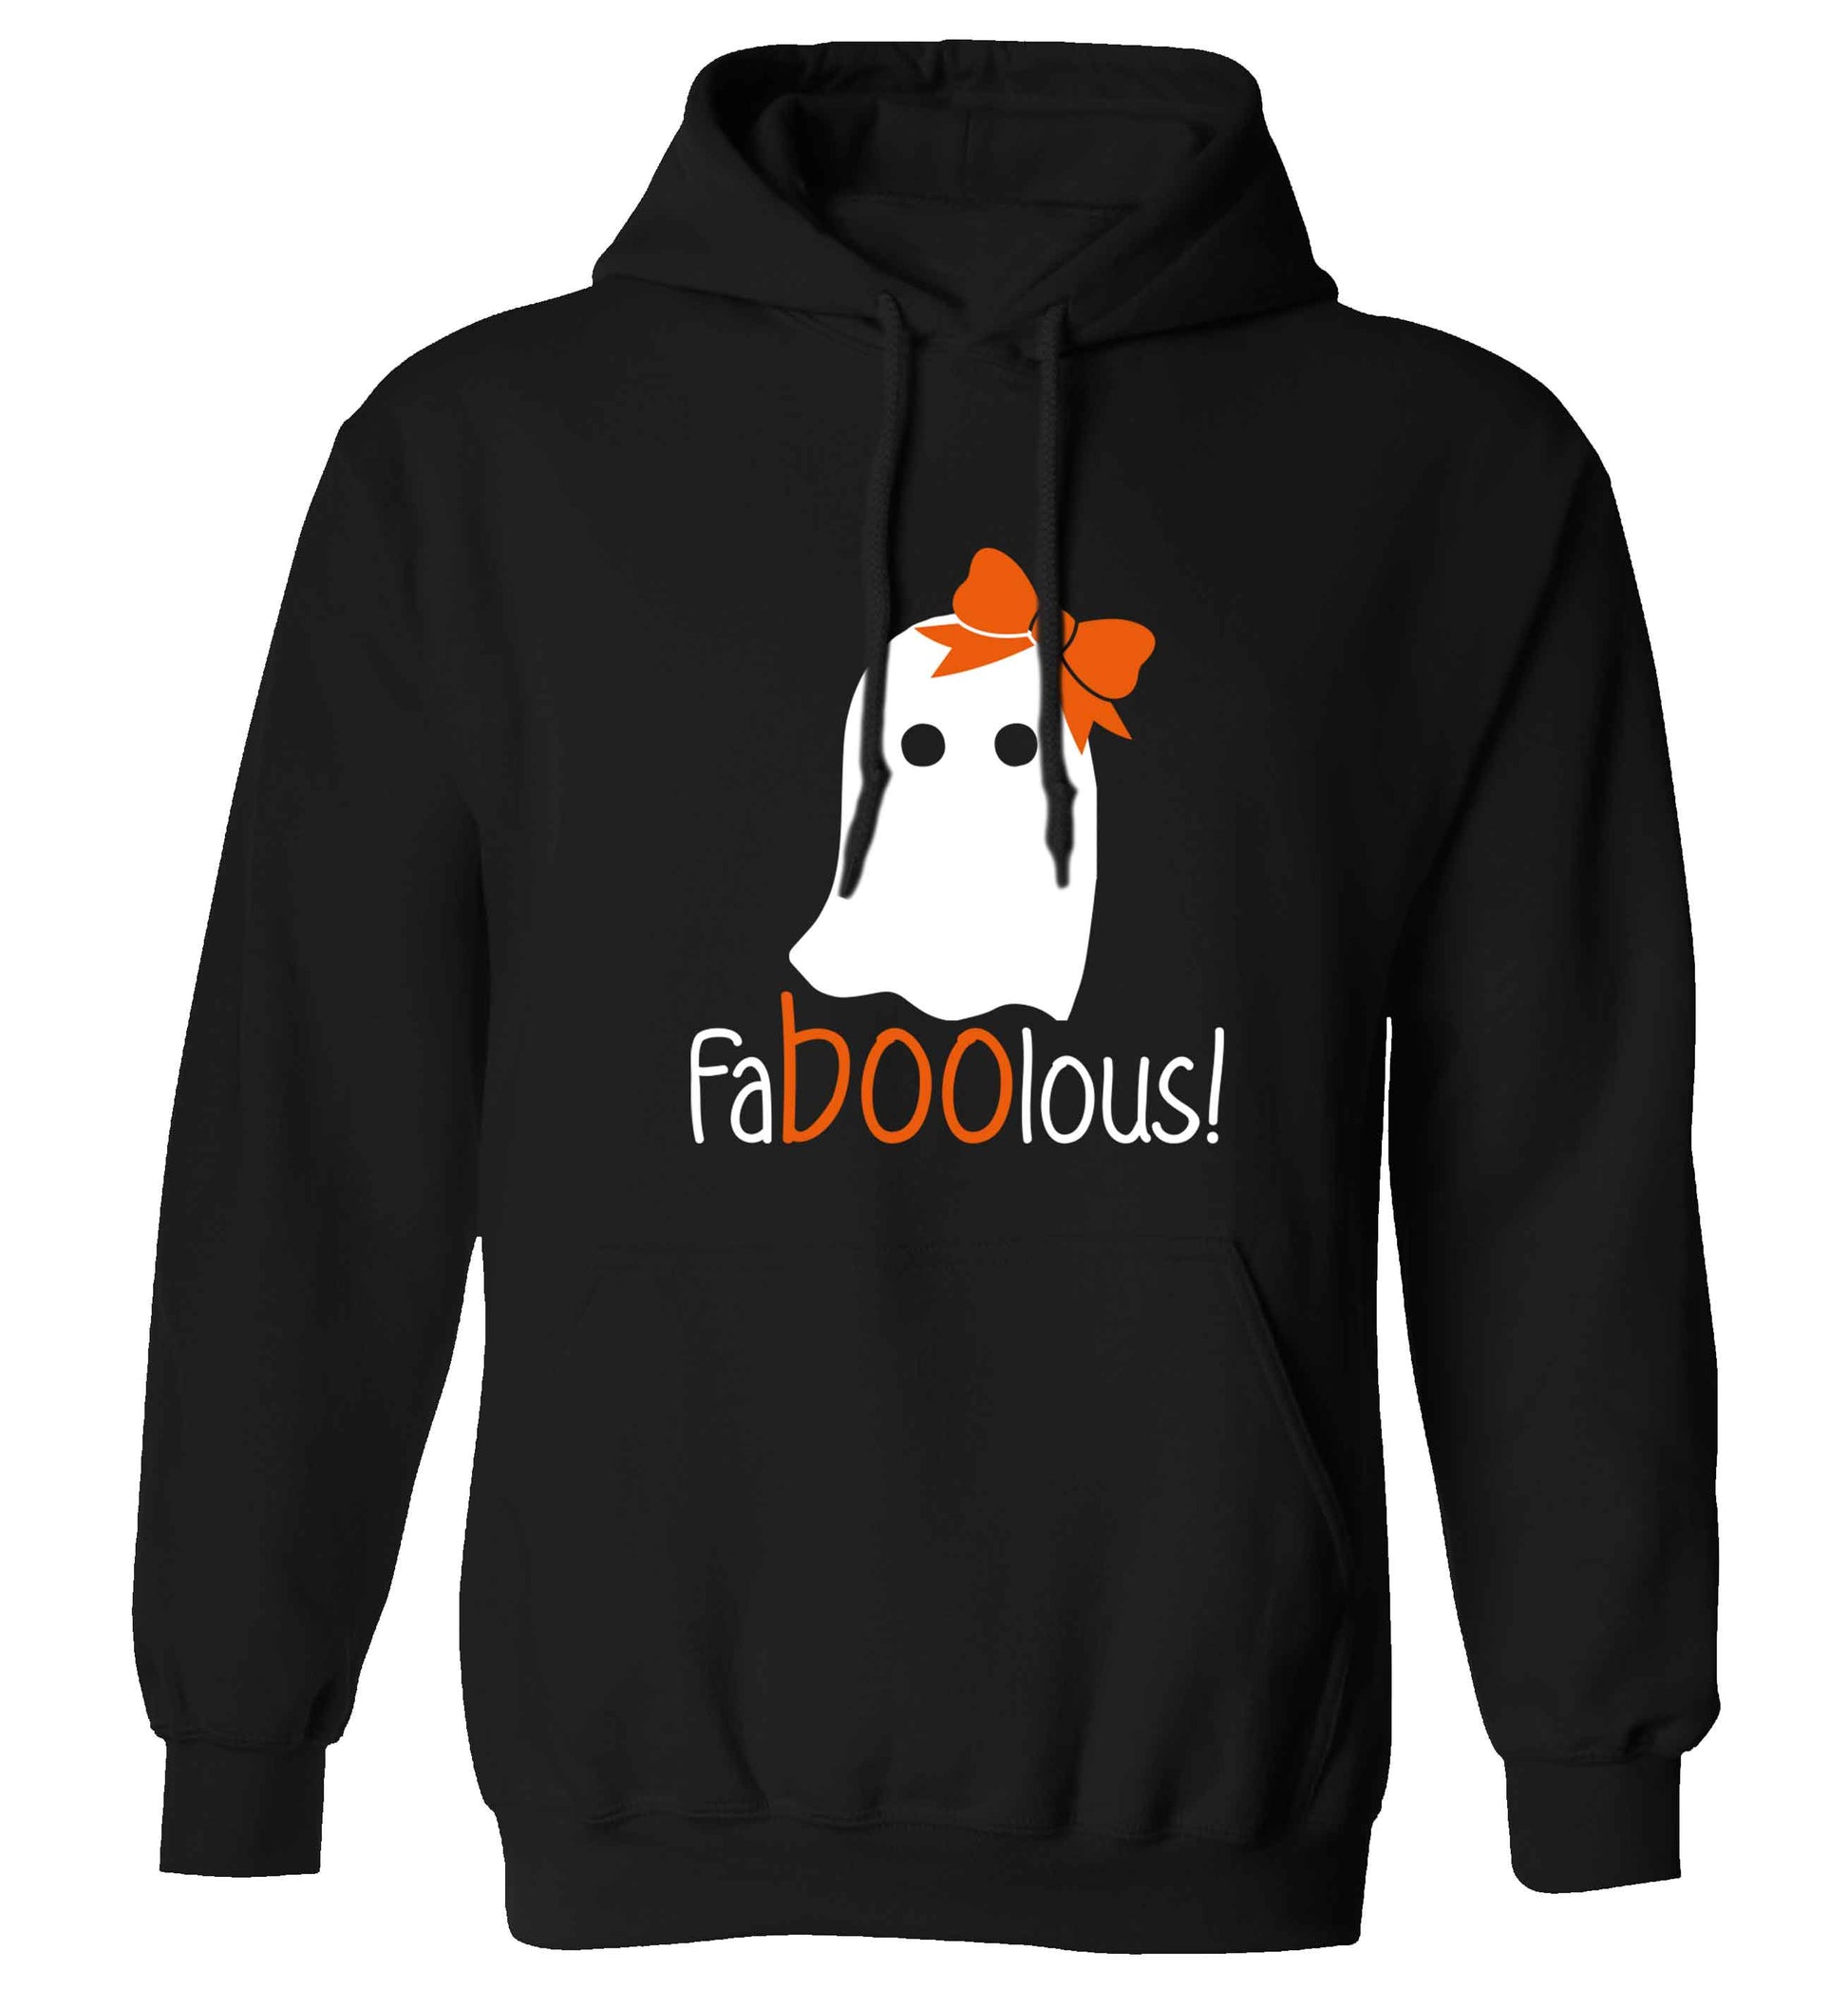 Faboolous ghost adults unisex black hoodie 2XL